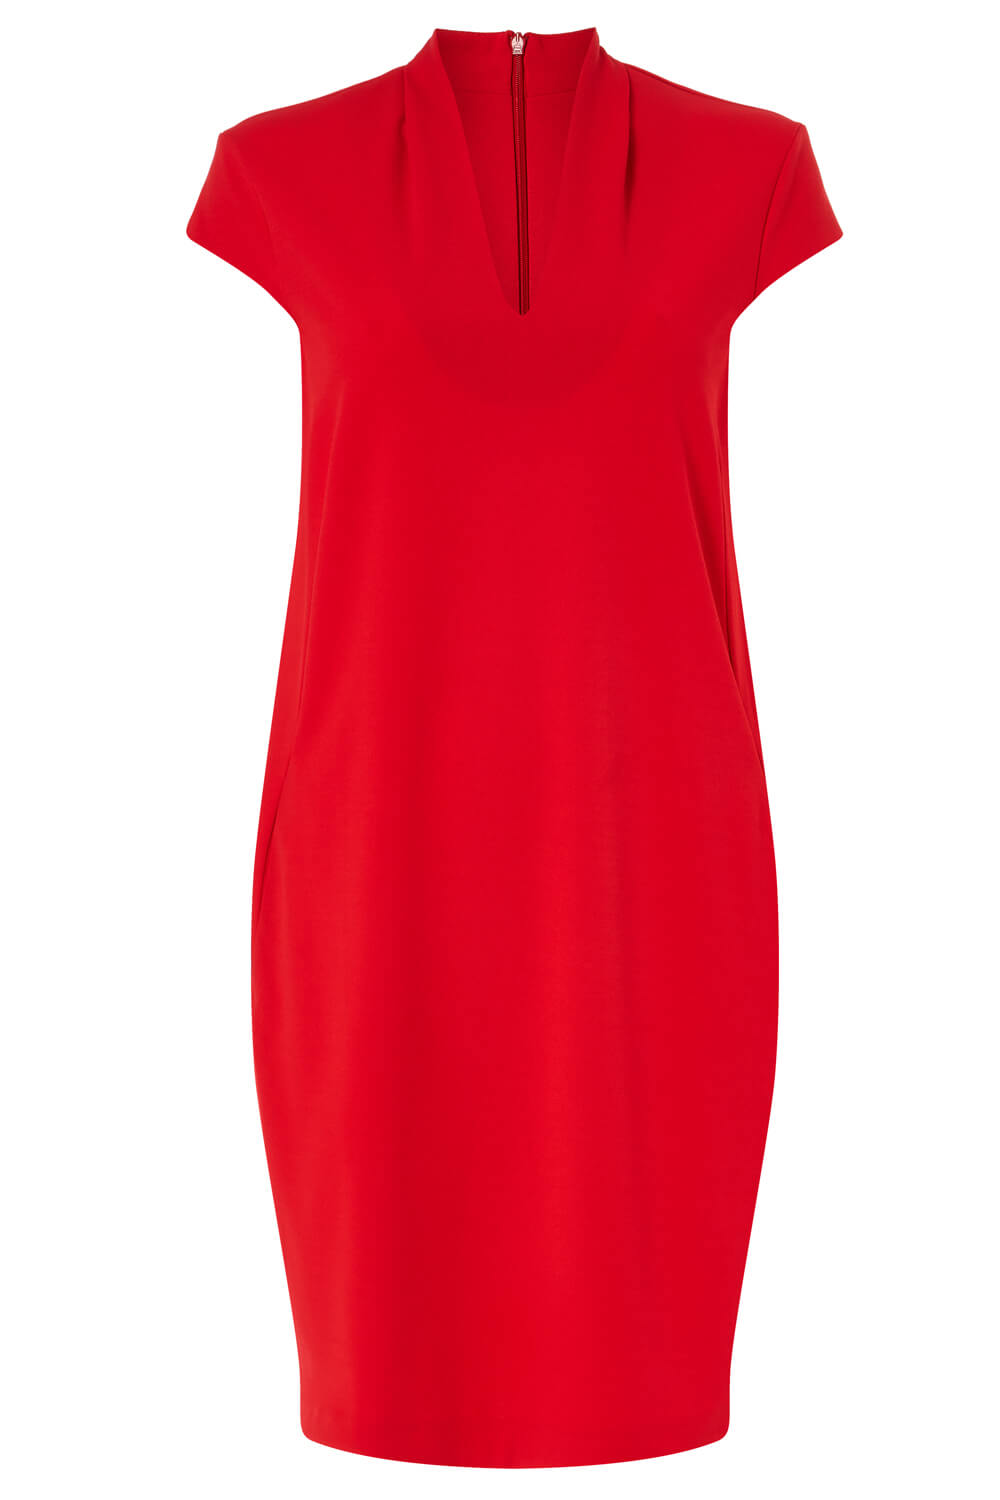 V Neck Cocoon Dress in Red - Roman Originals UK